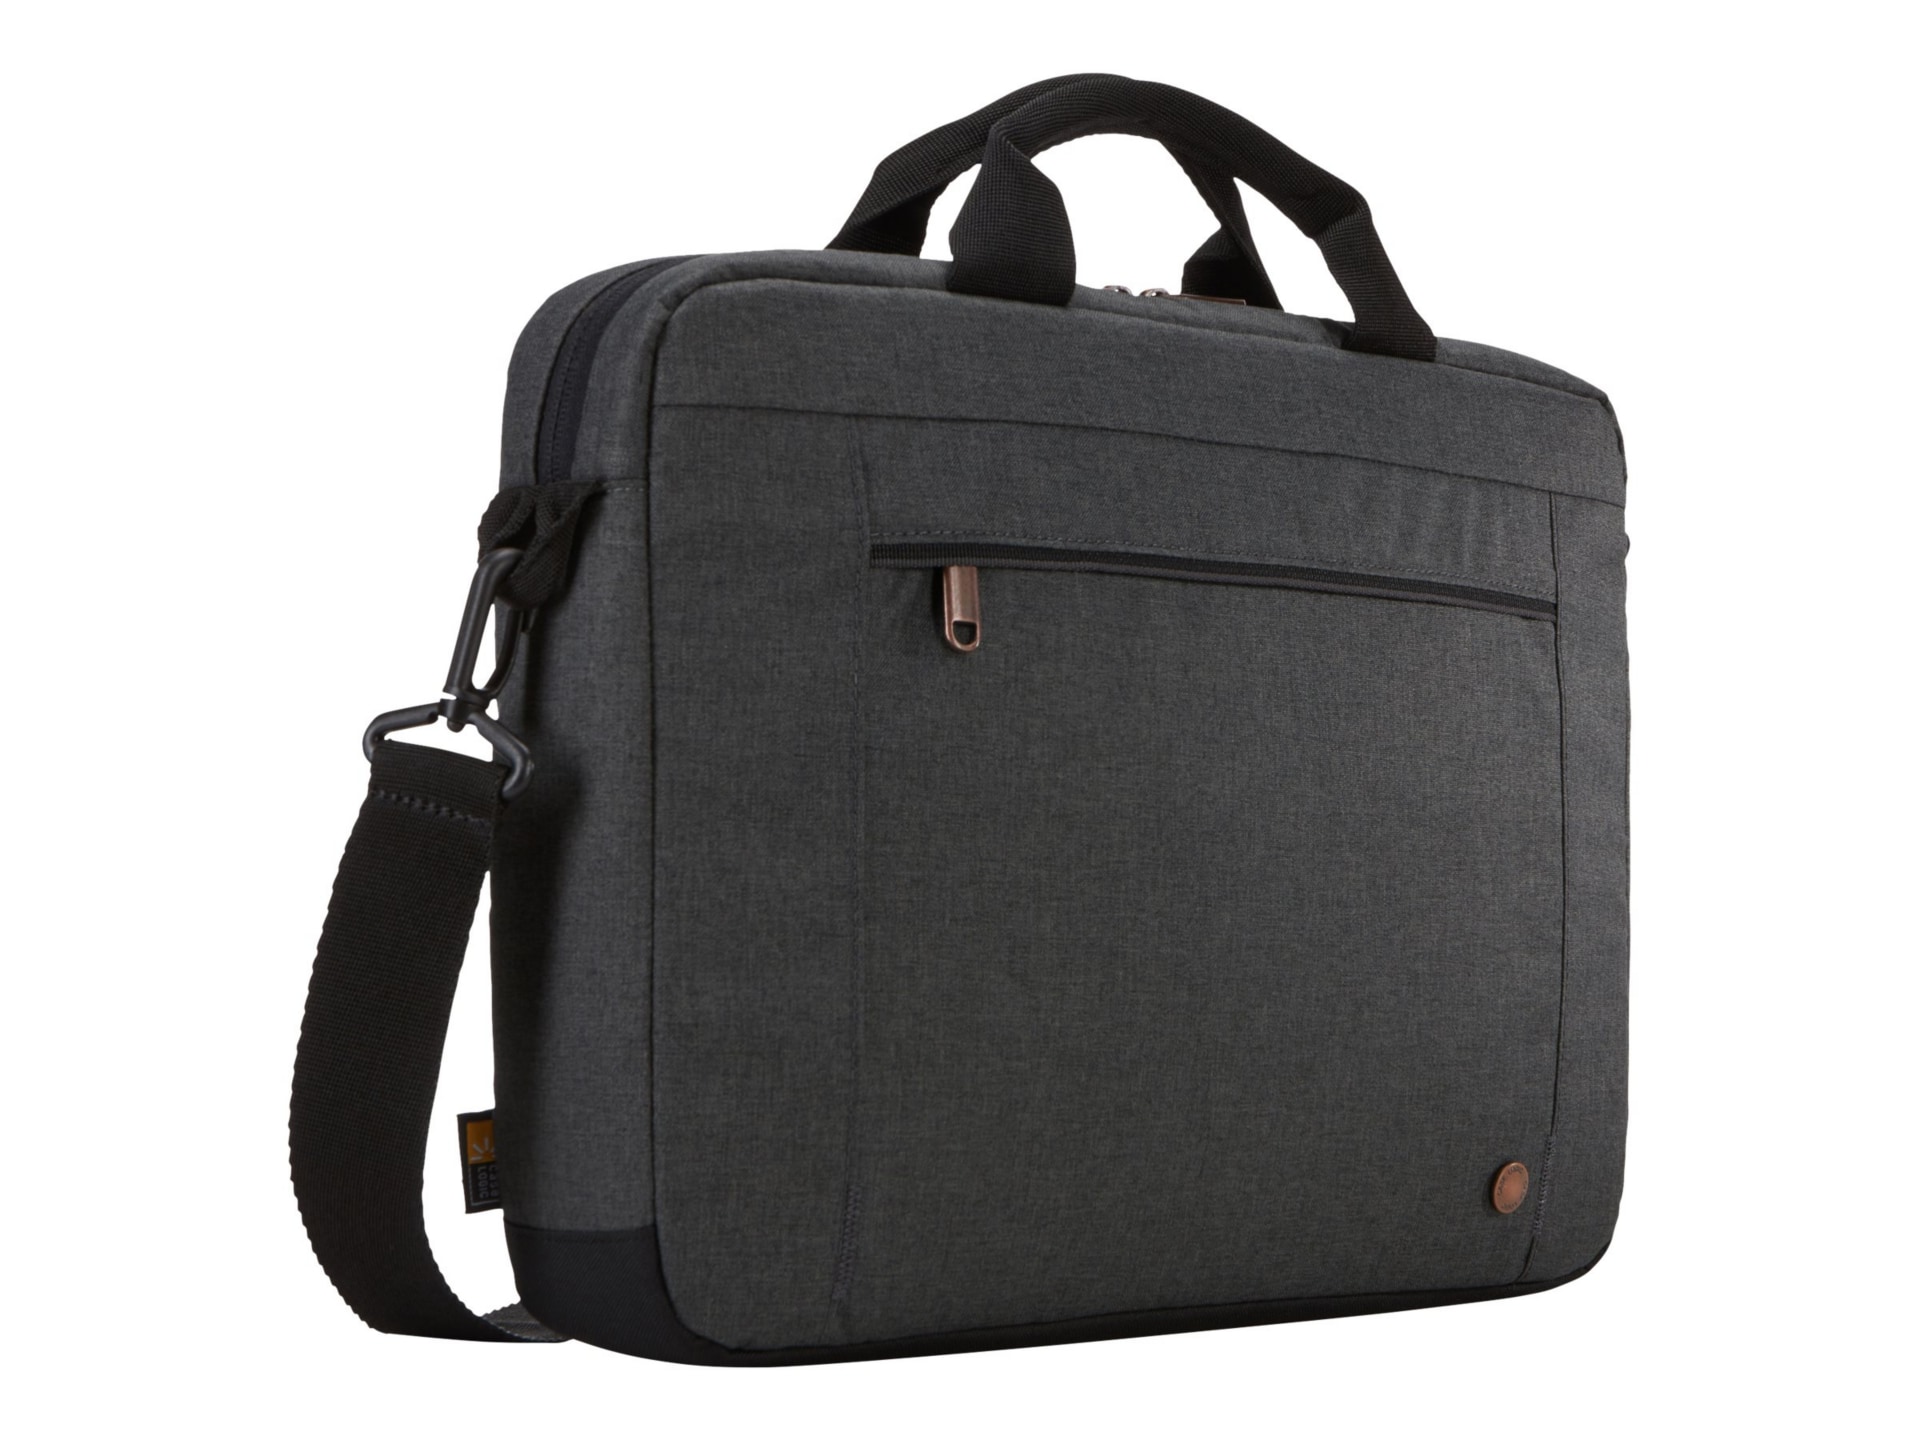 Case Logic ERA Laptop Attaché - notebook carrying shoulder bag